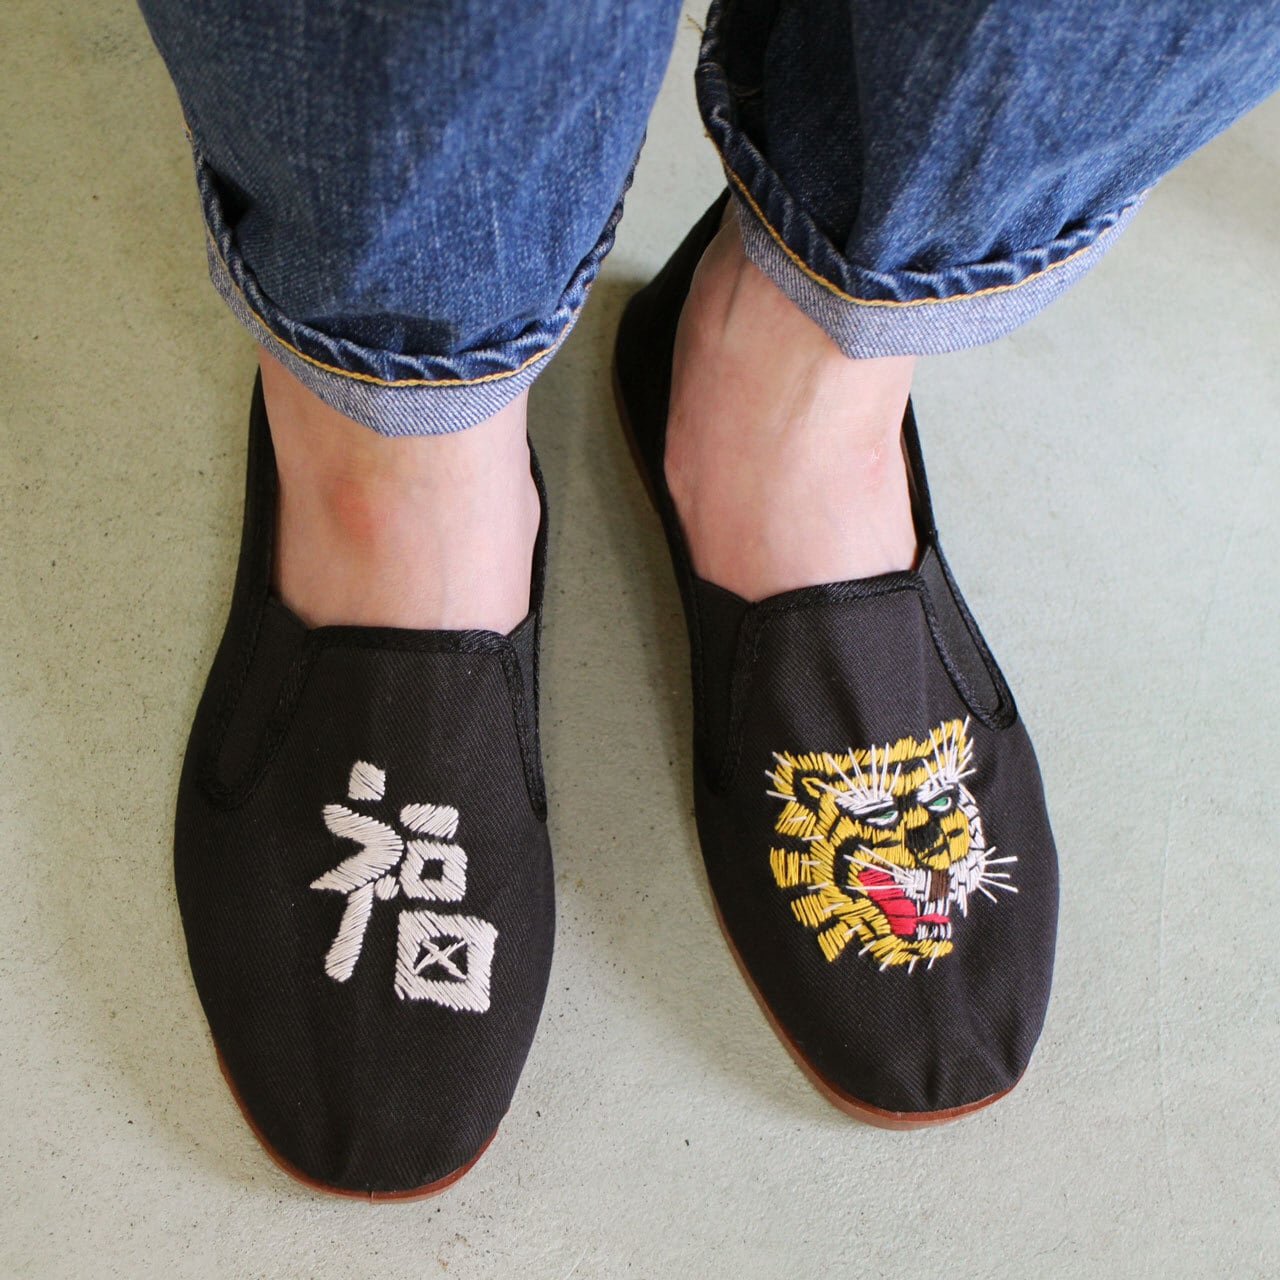 LET'S 功夫 Kung-Fu Shoes KF01 刺繍入りカンフーシューズ Escargot Circus